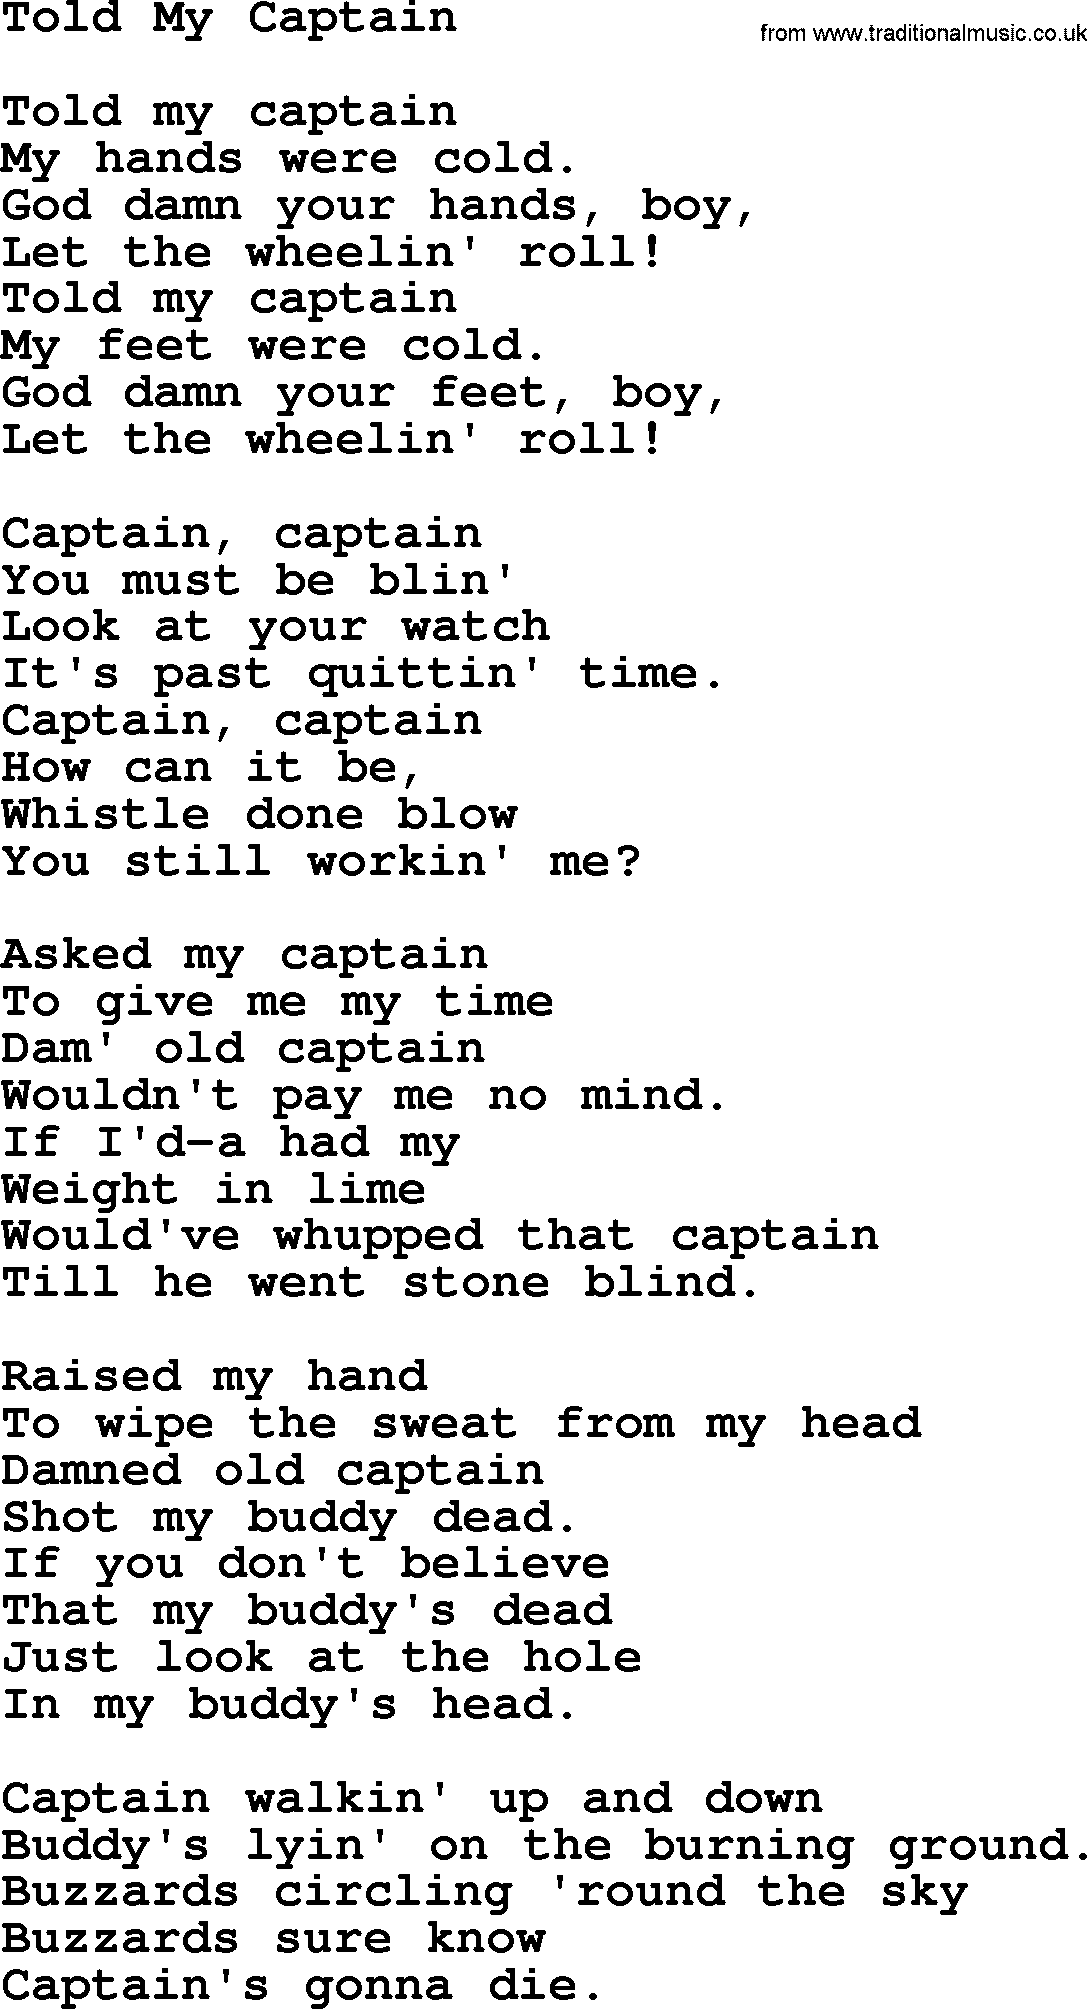 Joan Baez song Told My Captain, lyrics